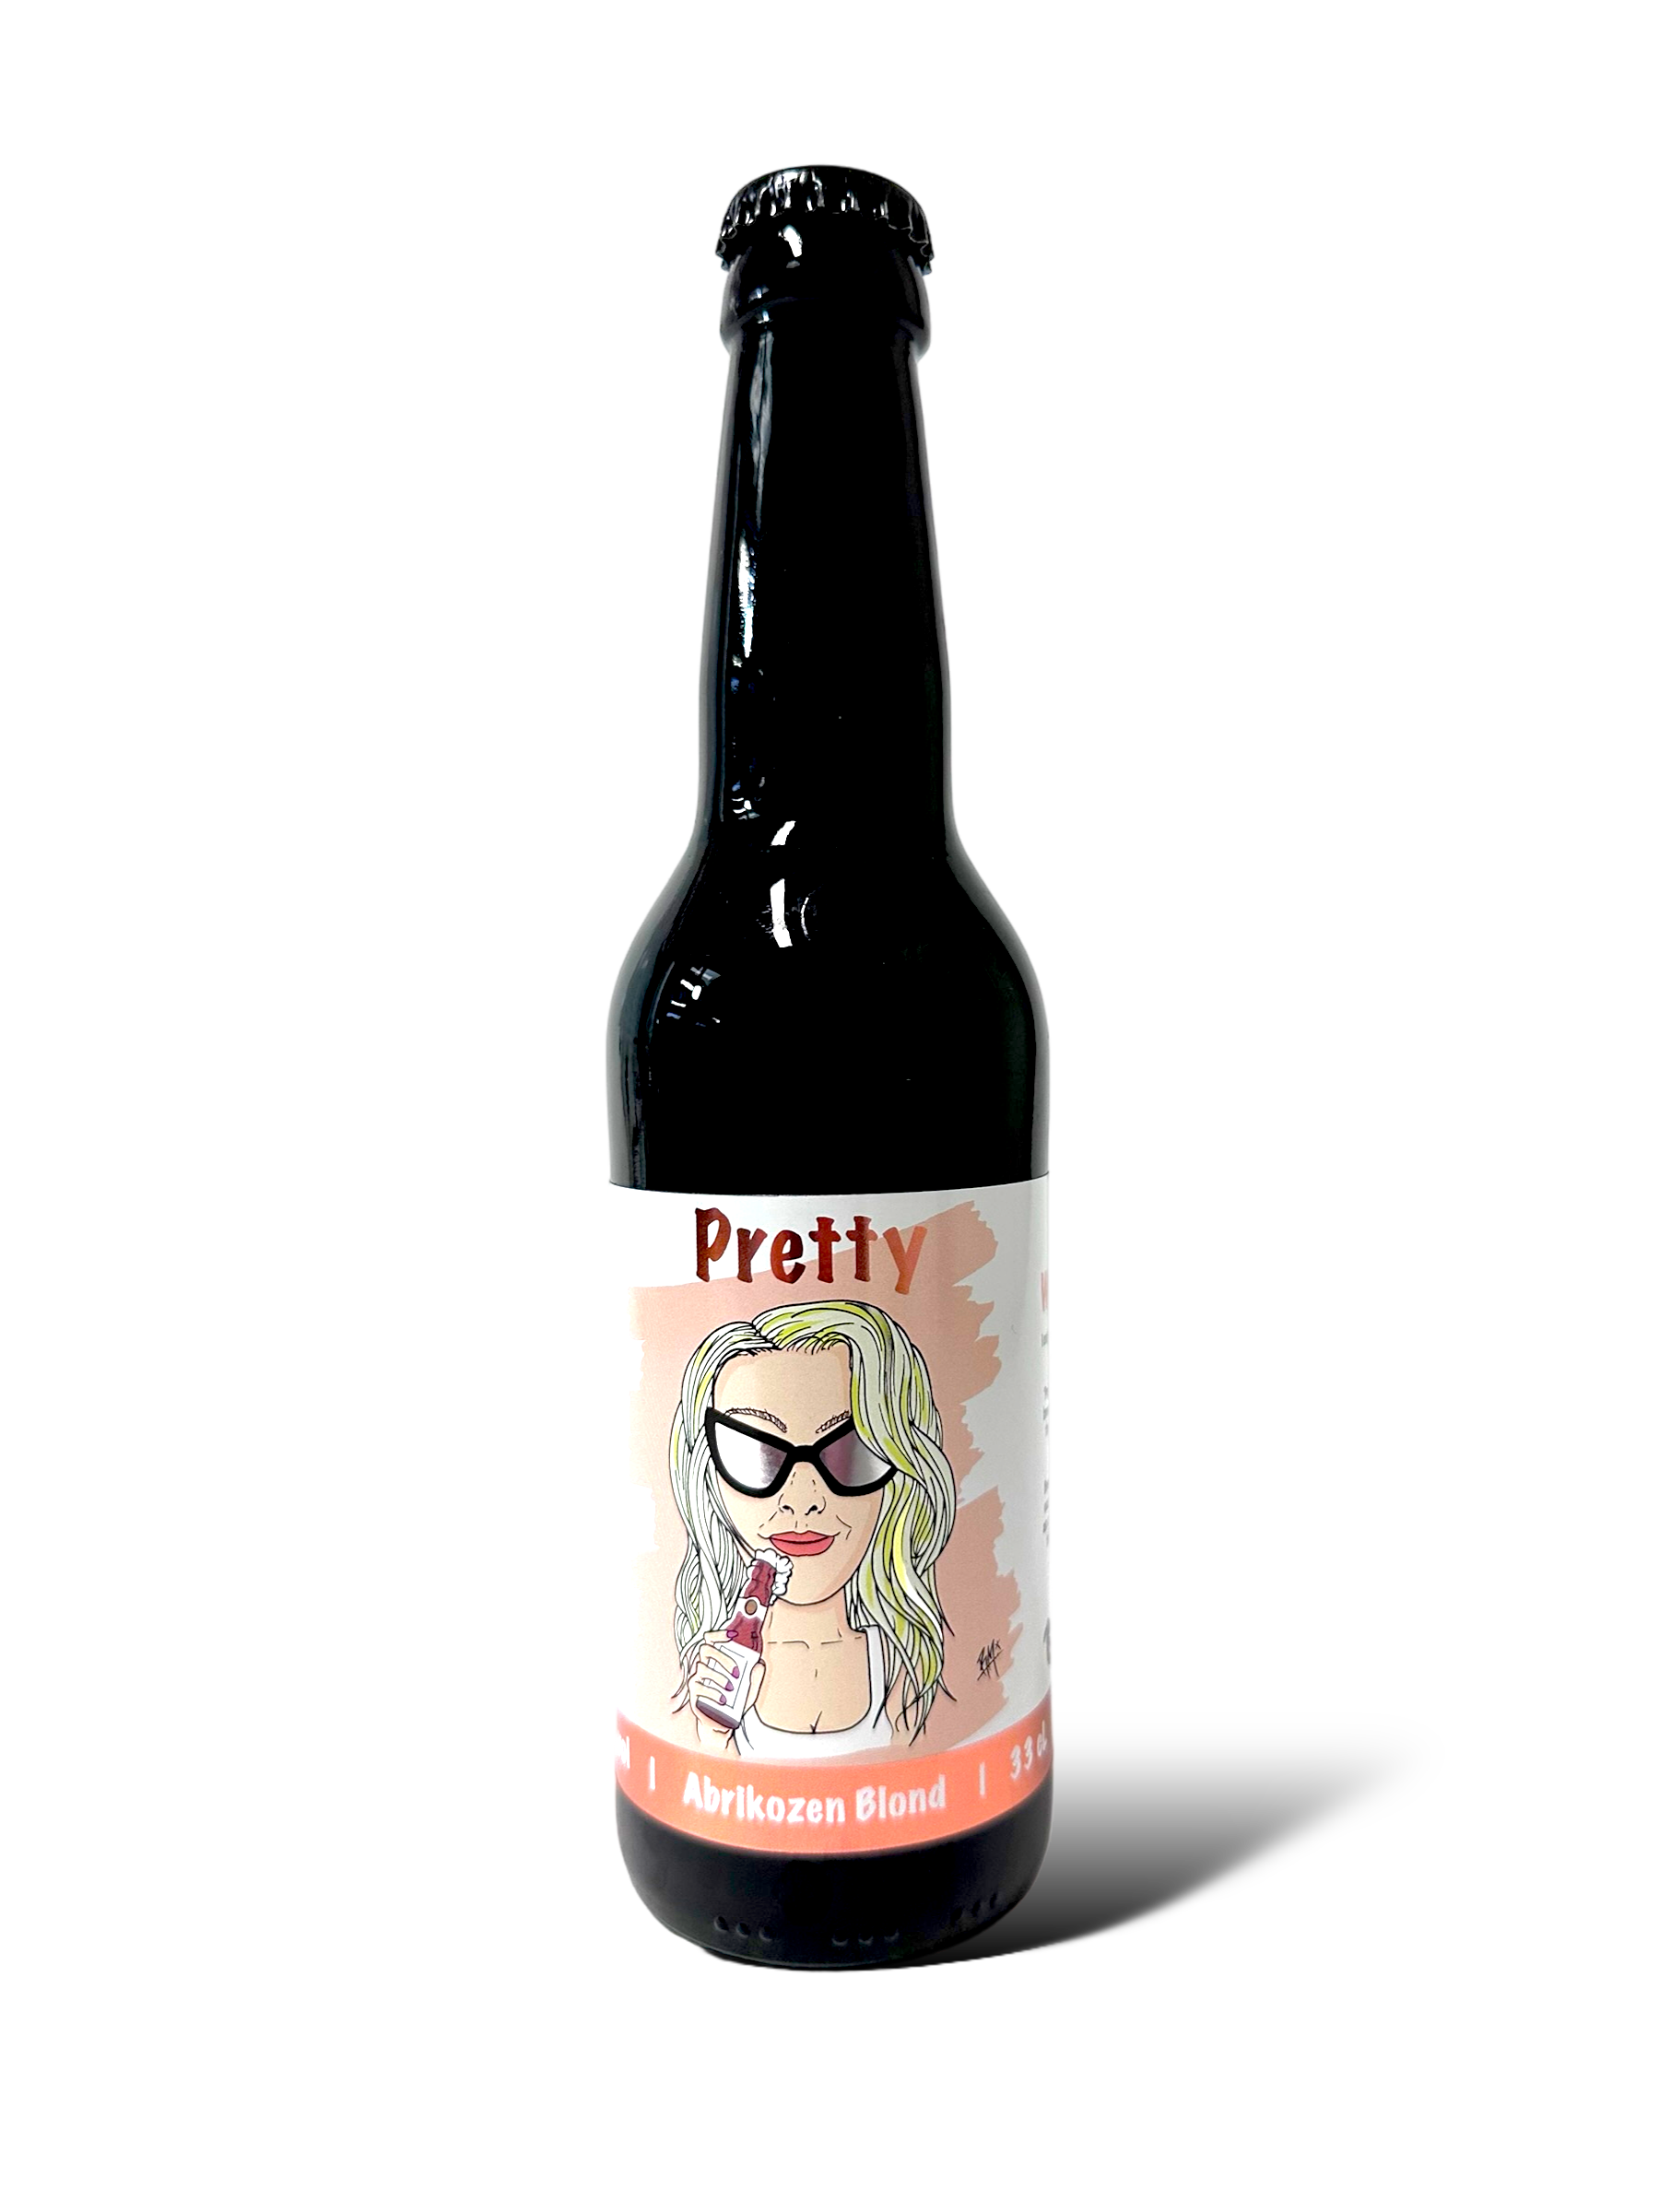 'Pretty' BeerMeister Bandit #1